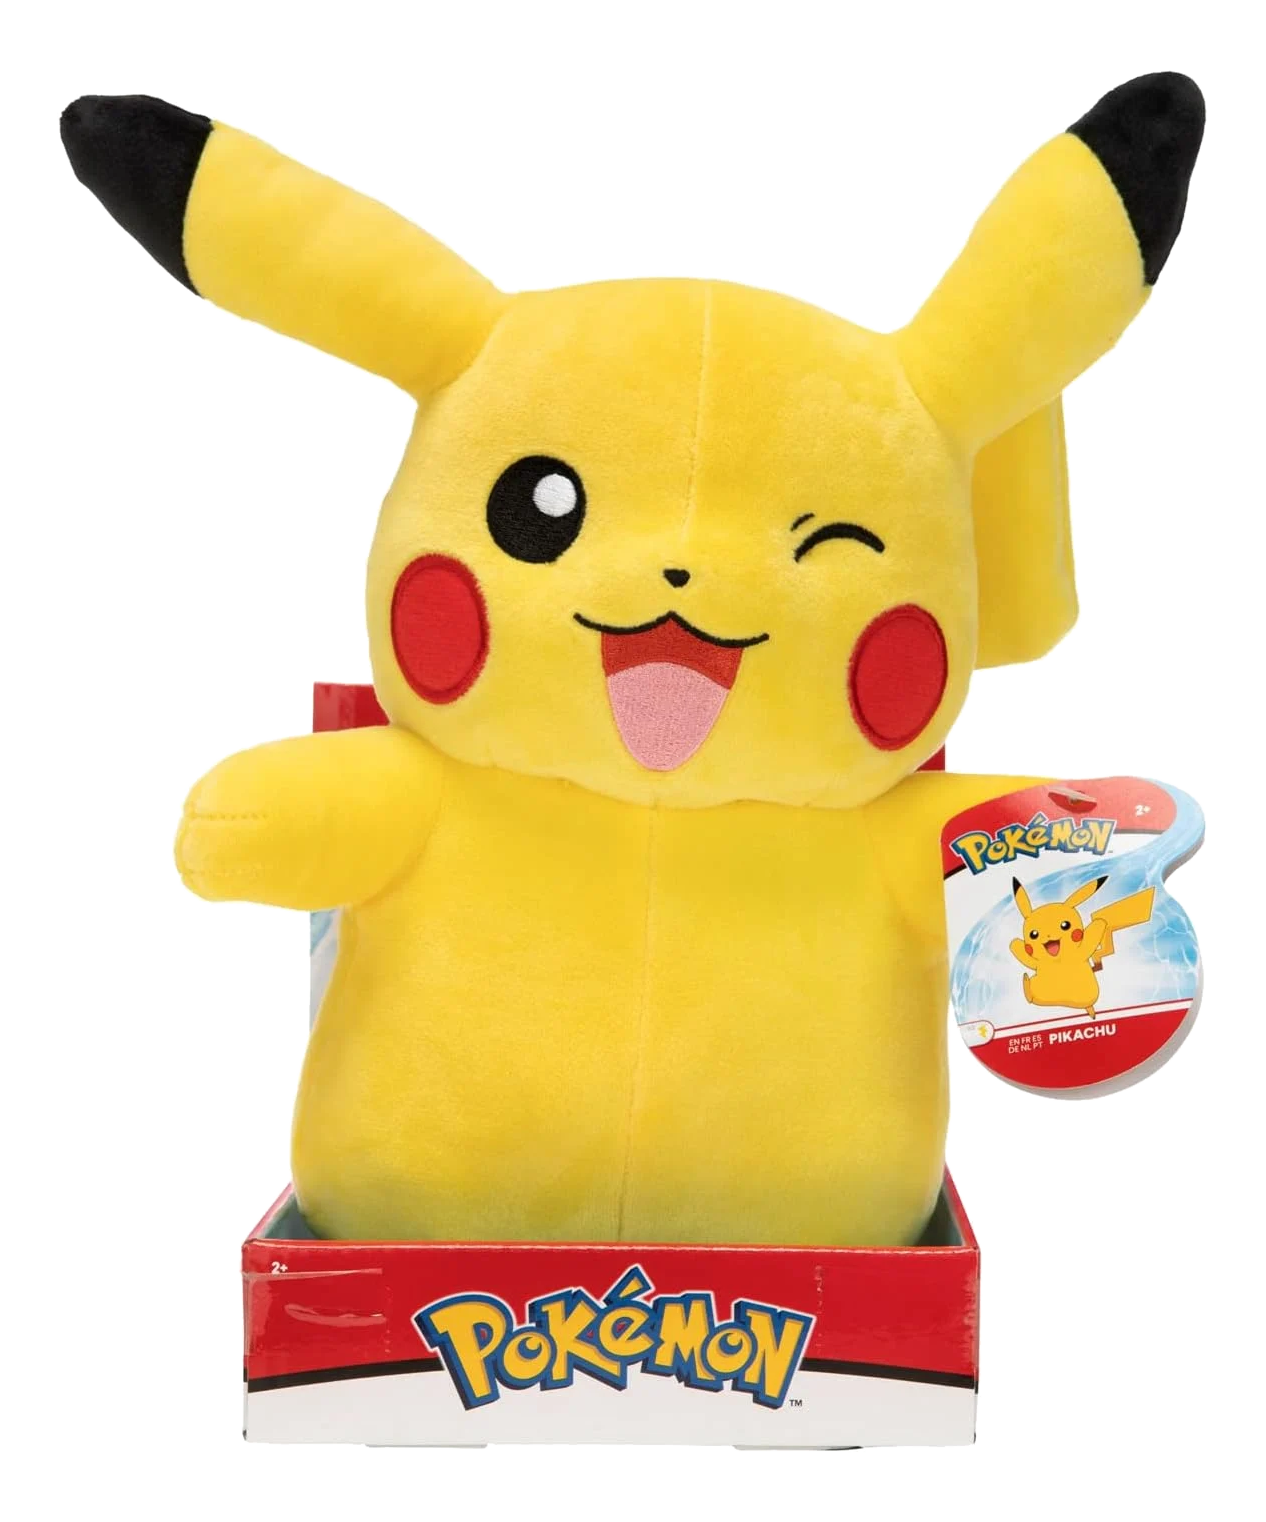 BANDAI NAMCO Pokémon Pikachu - Plüschfigur (Gelb/Rot/Schwarz)